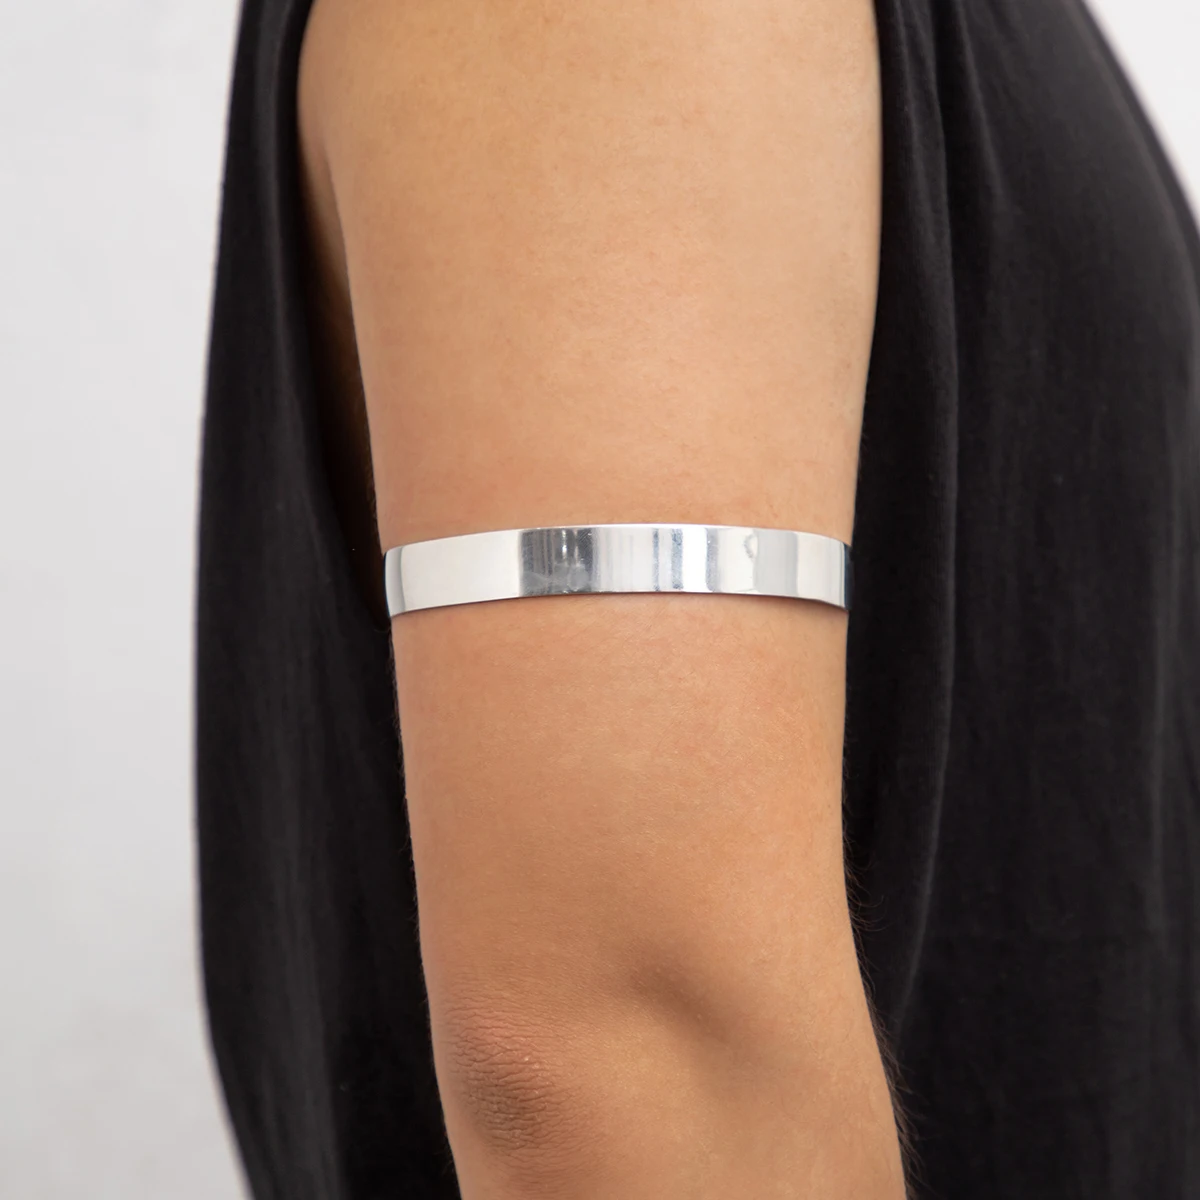 Faded Future grunge arm cuff bracelet in silver | ASOS